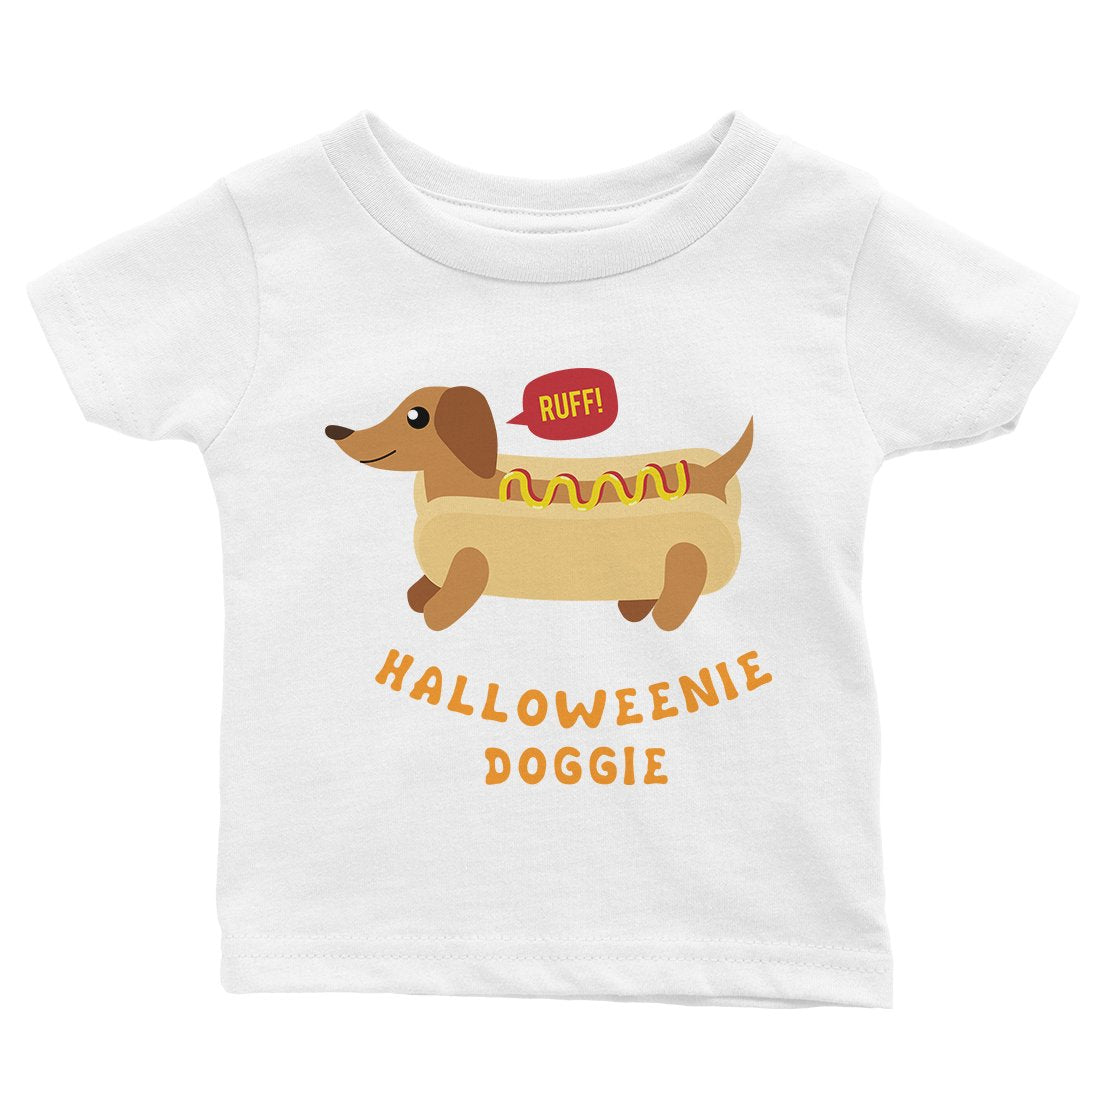 Halloweenie Doggie Baby Gift Tee